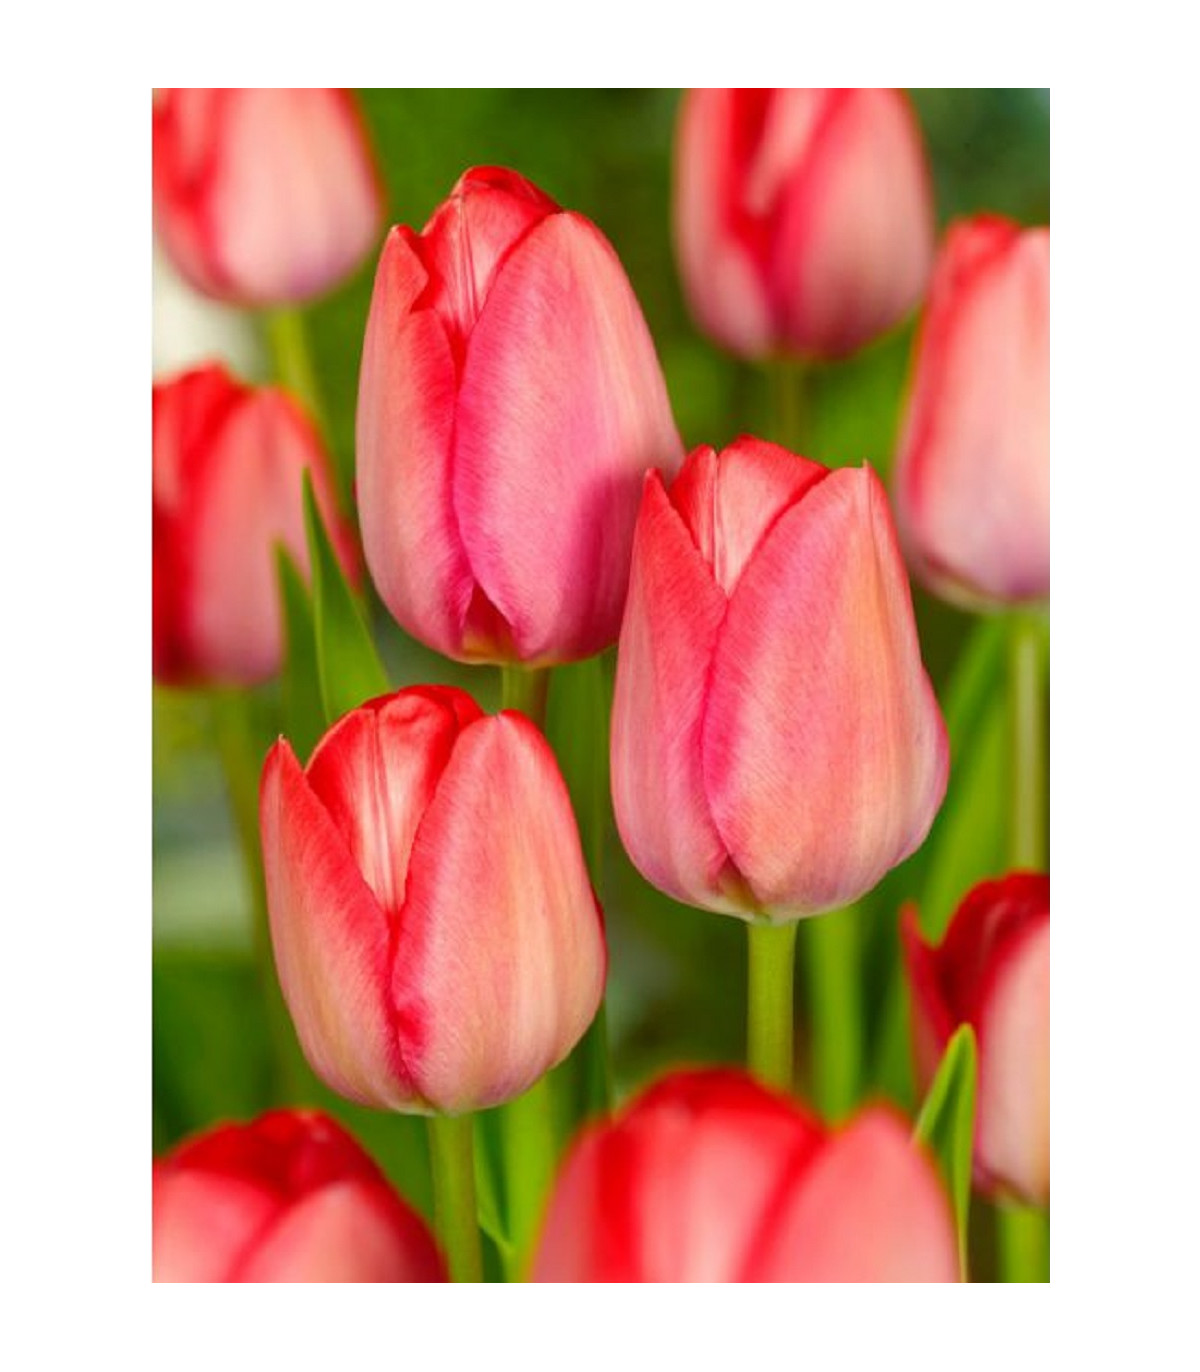 Tulipán Van Eijk - Tulipa - prodej cibulovin - 3 ks